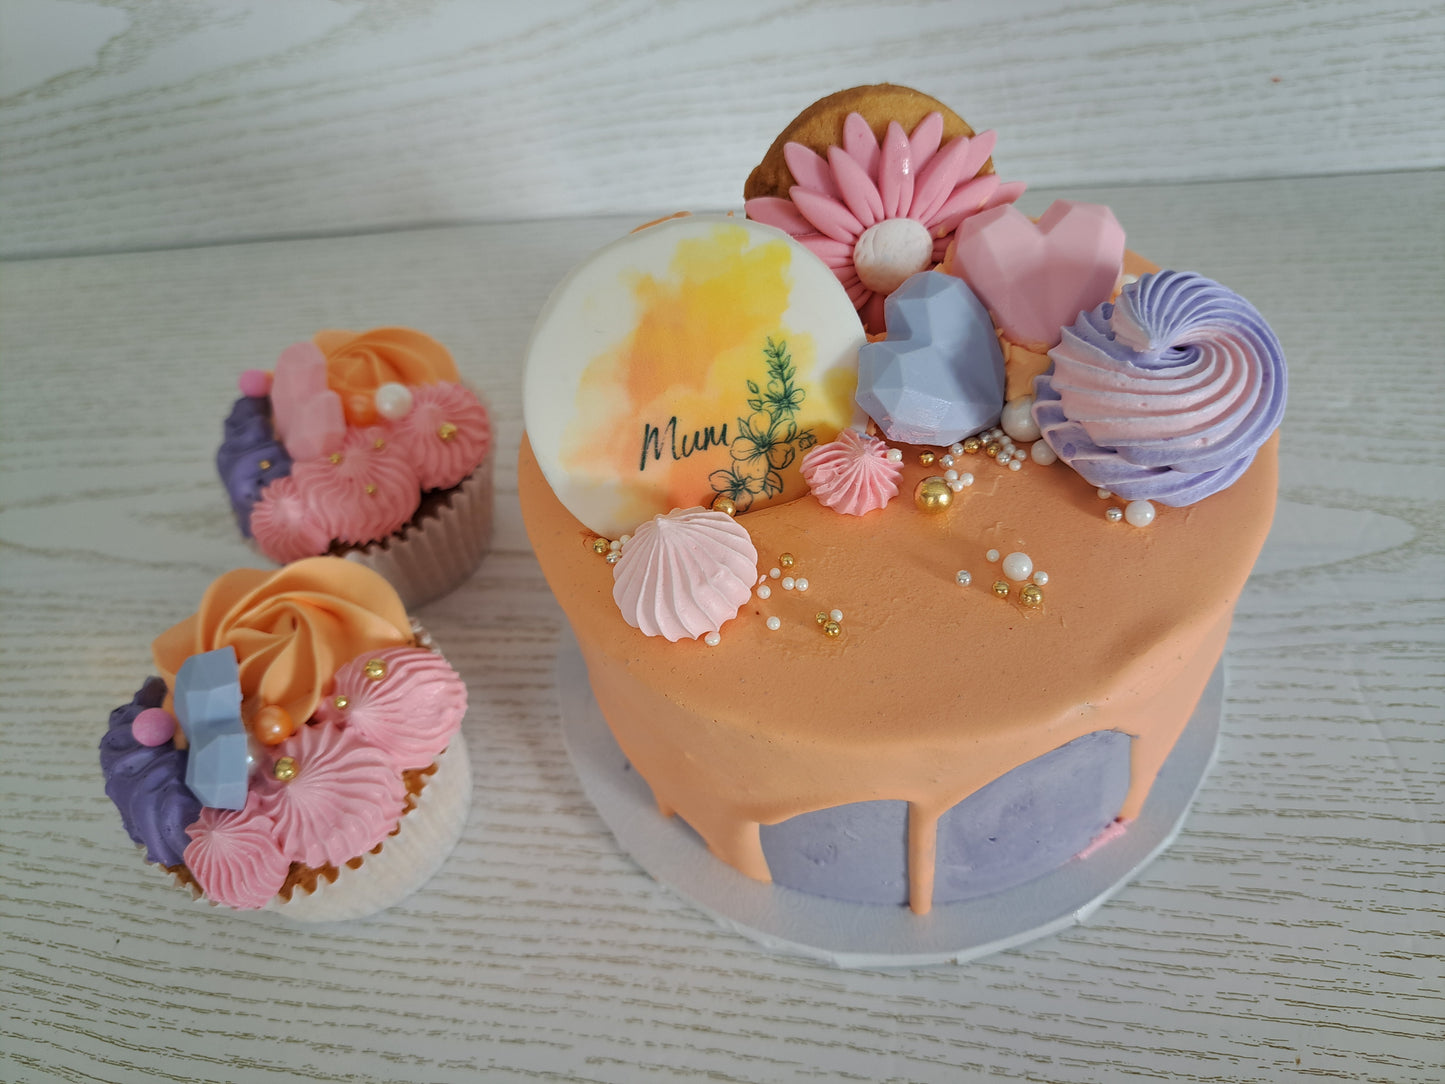 Bento cake and Cupcakes